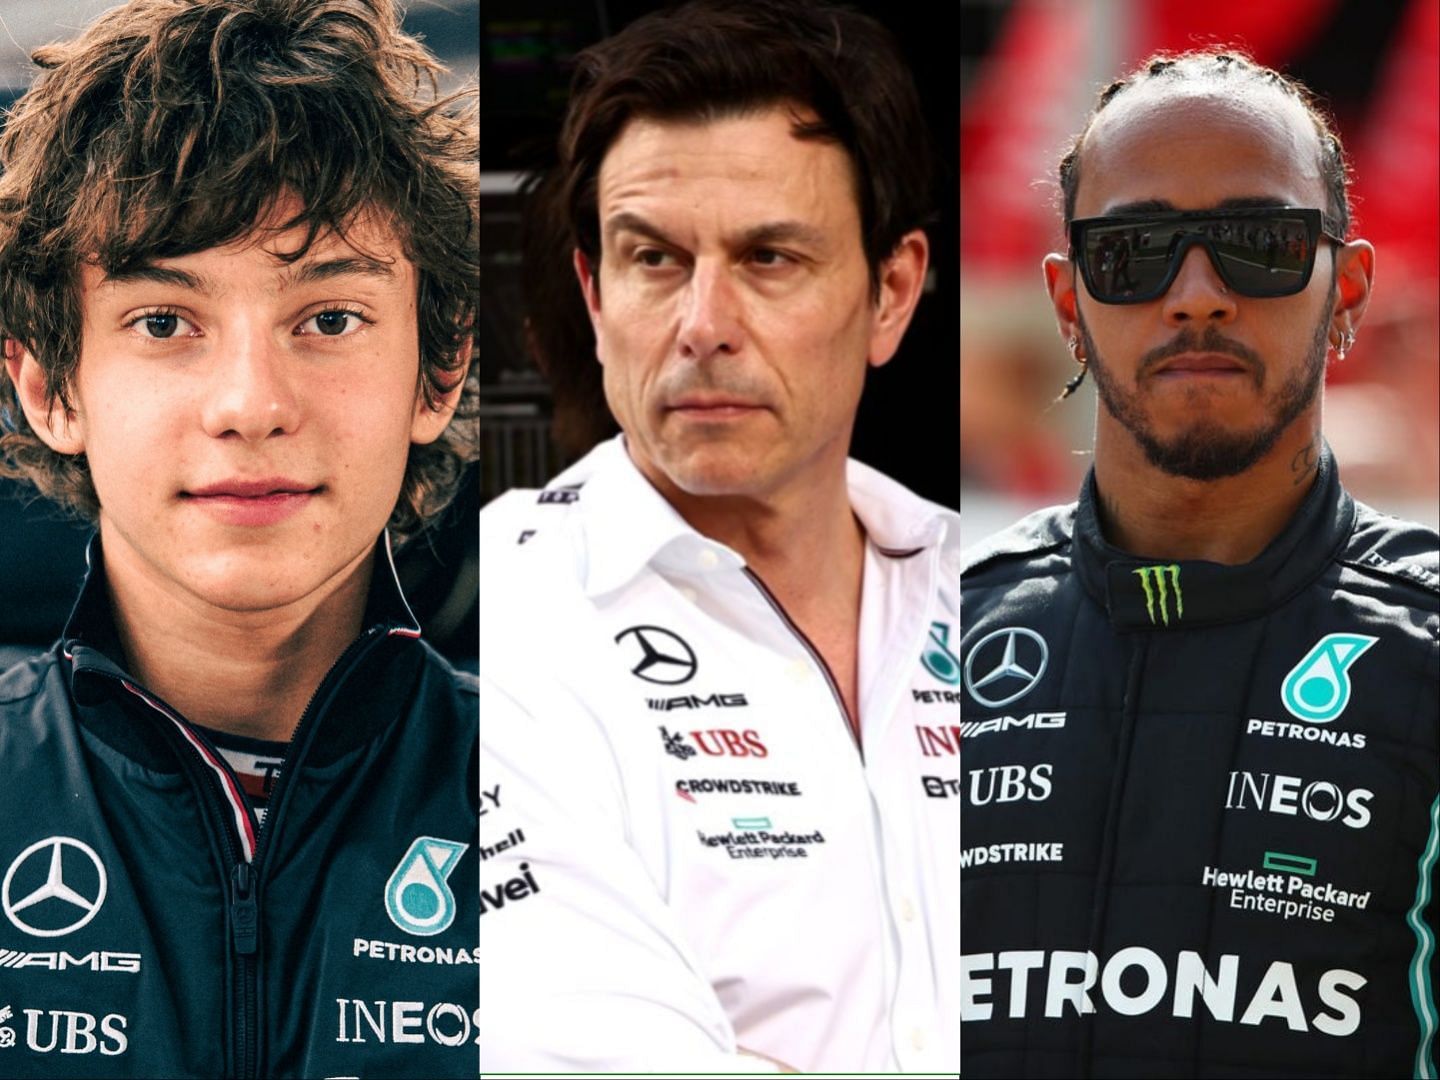 Kimi Antonelli, Toto Wolff and Lewis Hamilton (Image 1 via Mercedes F1 team, Image 2, 3 via Getty)